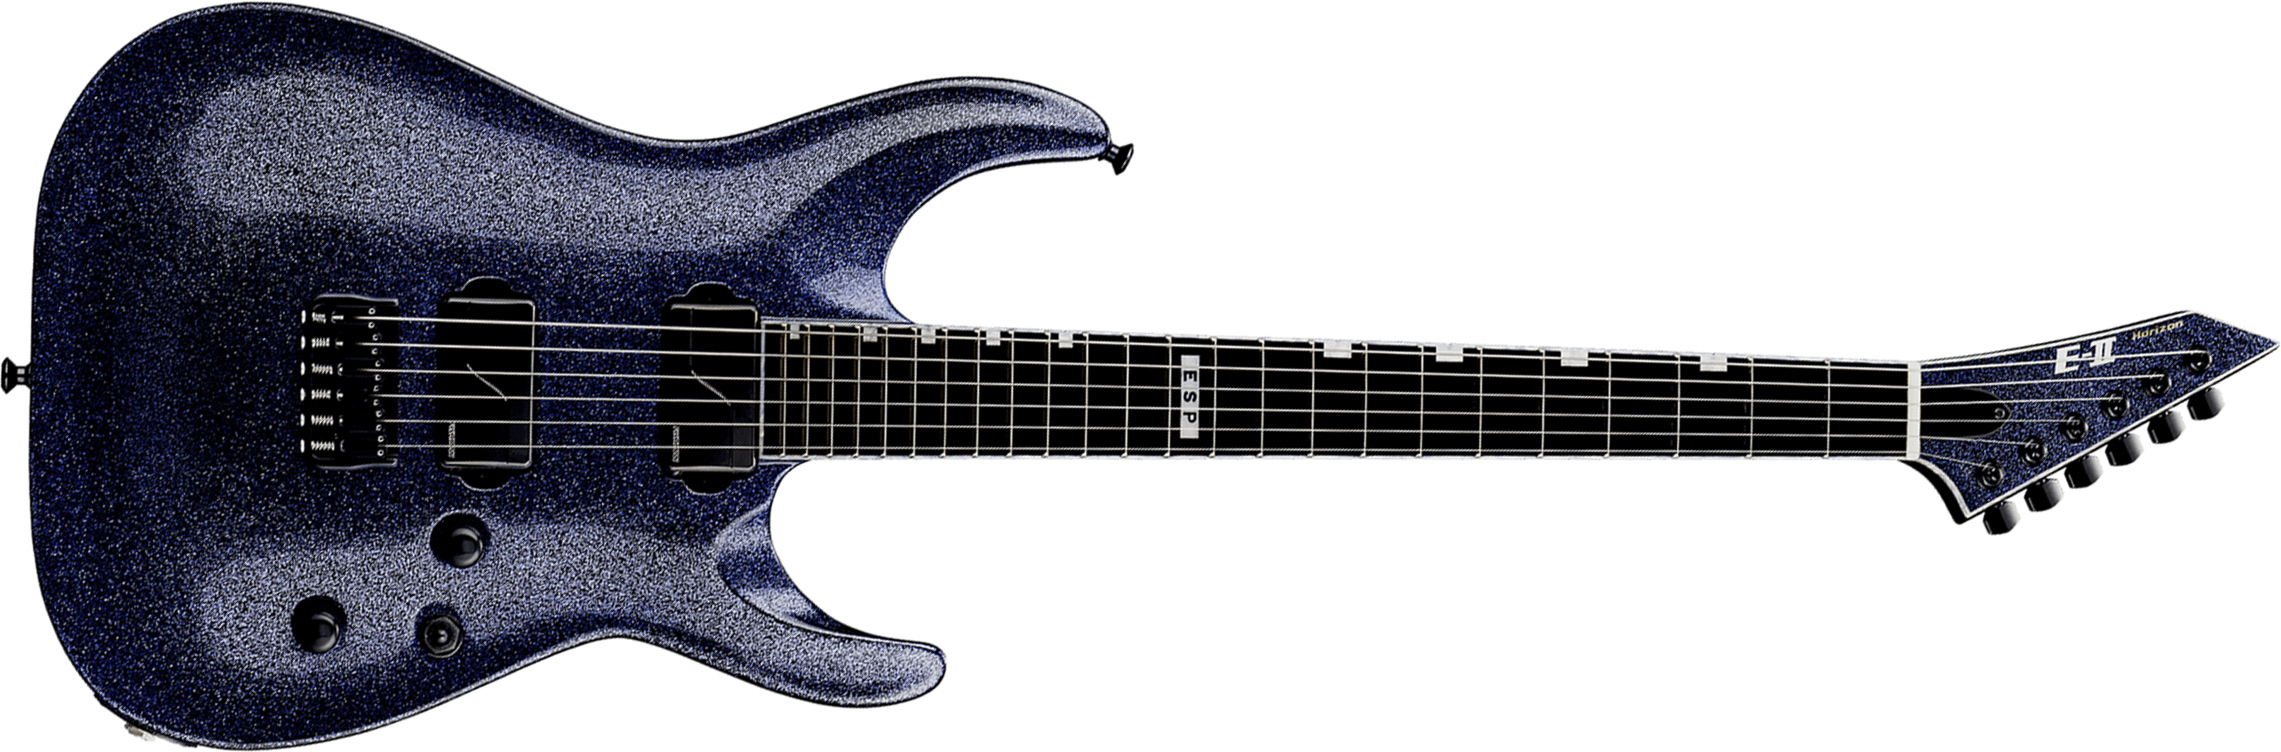 Esp E-ii Horizon Nt Hs Jap 2h Fishman Fluence Modern Ht Eb - Amethyst Sparkle - E-Gitarre in Str-Form - Main picture